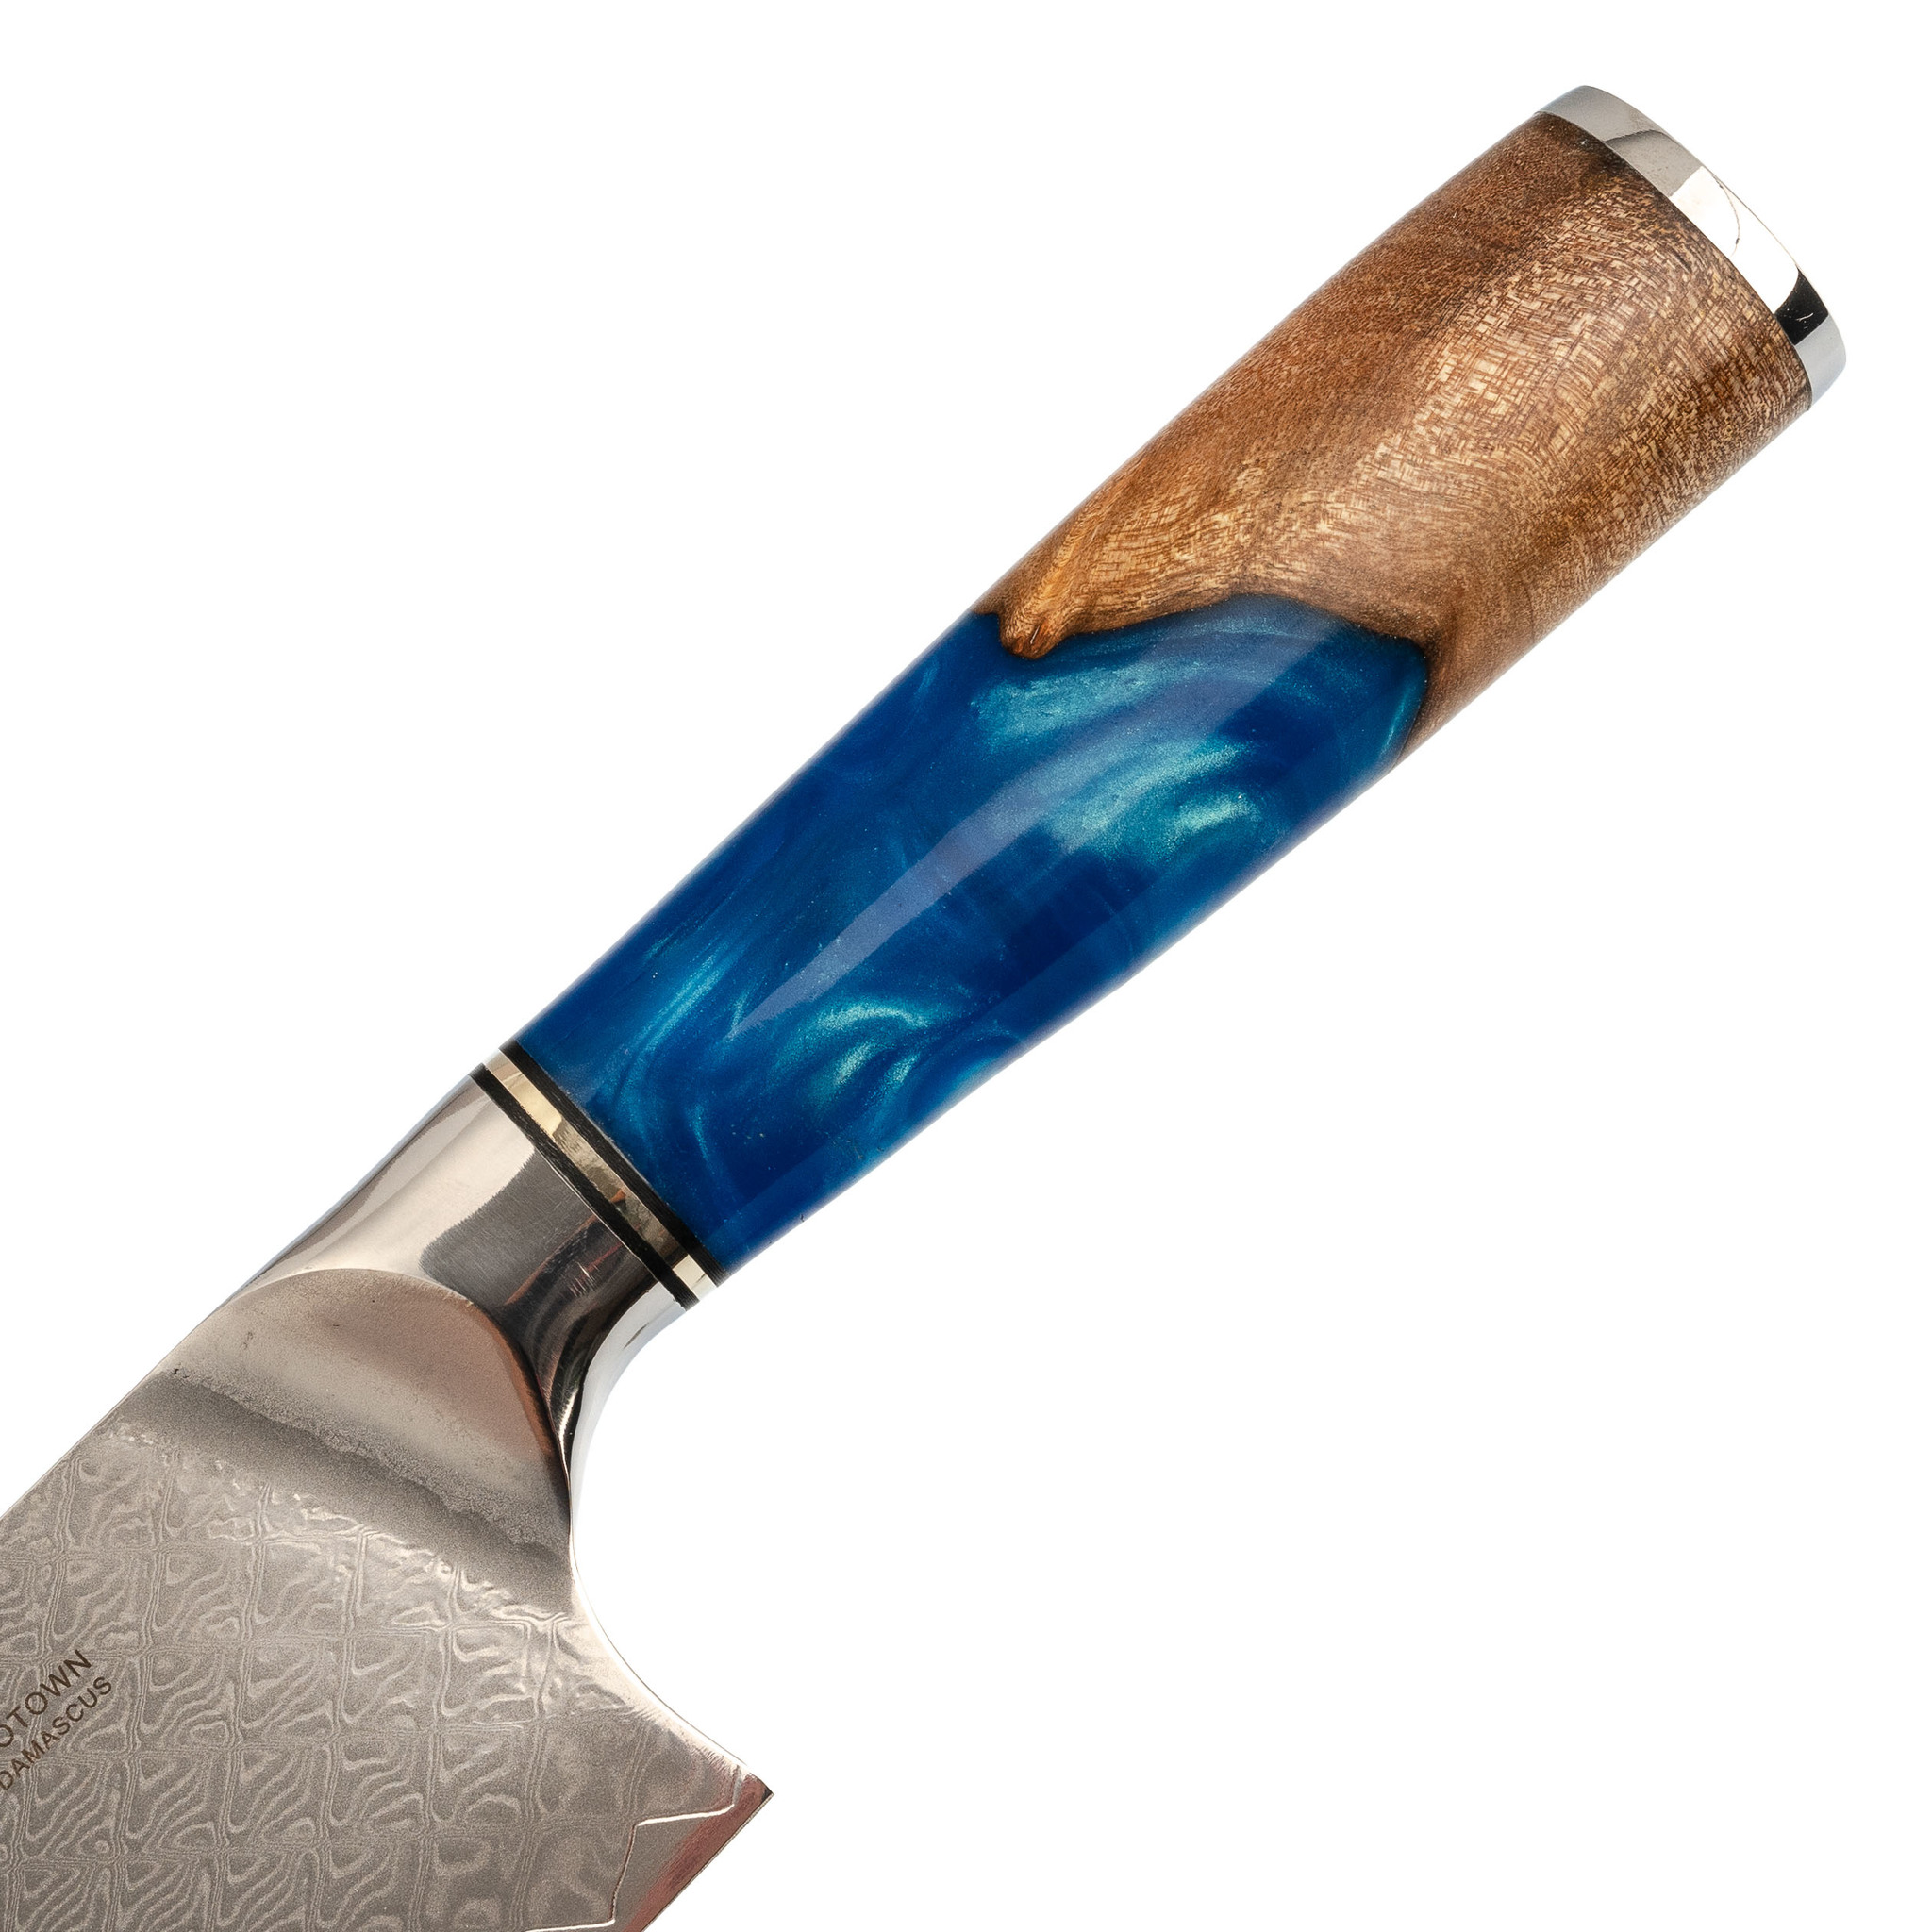 Кухонный шеф нож (Гуйто) Tuotown SG-001, сталь VG-10, рукоять дерево/эпоксидка - фото 7